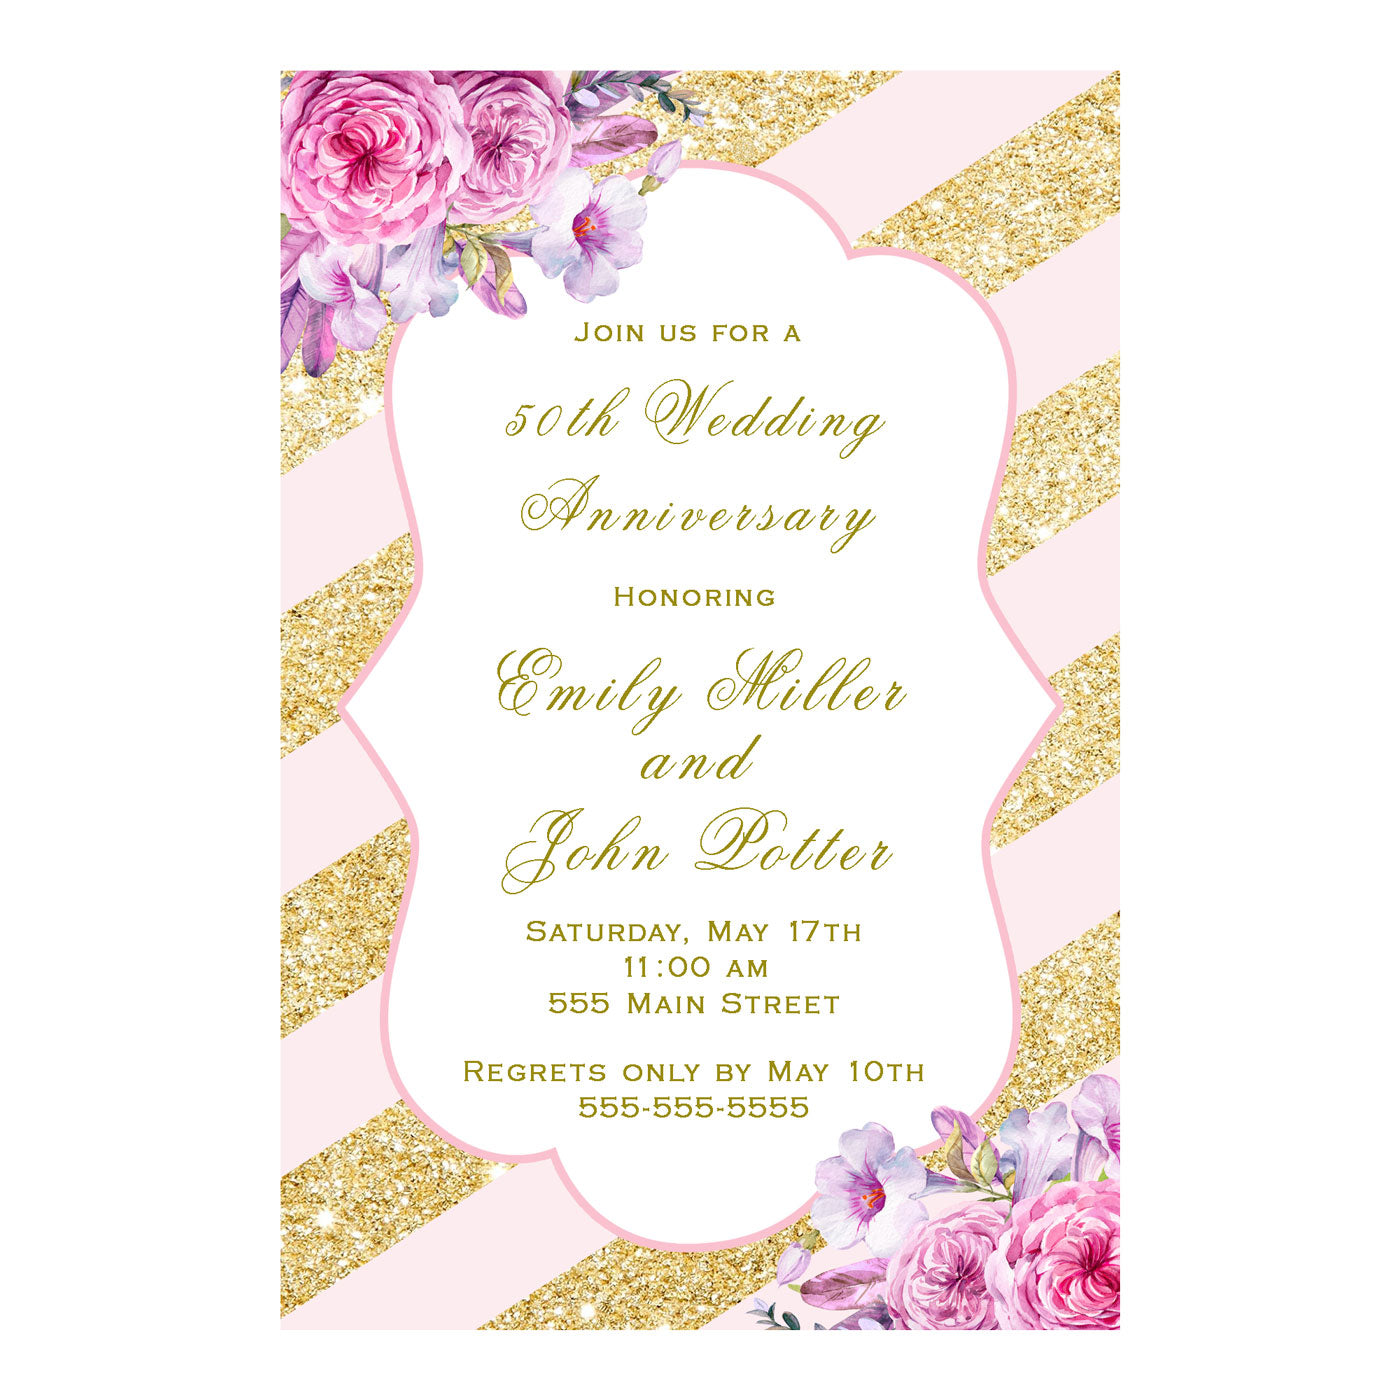 Wedding anniversary invitations blush pink gold floral printable